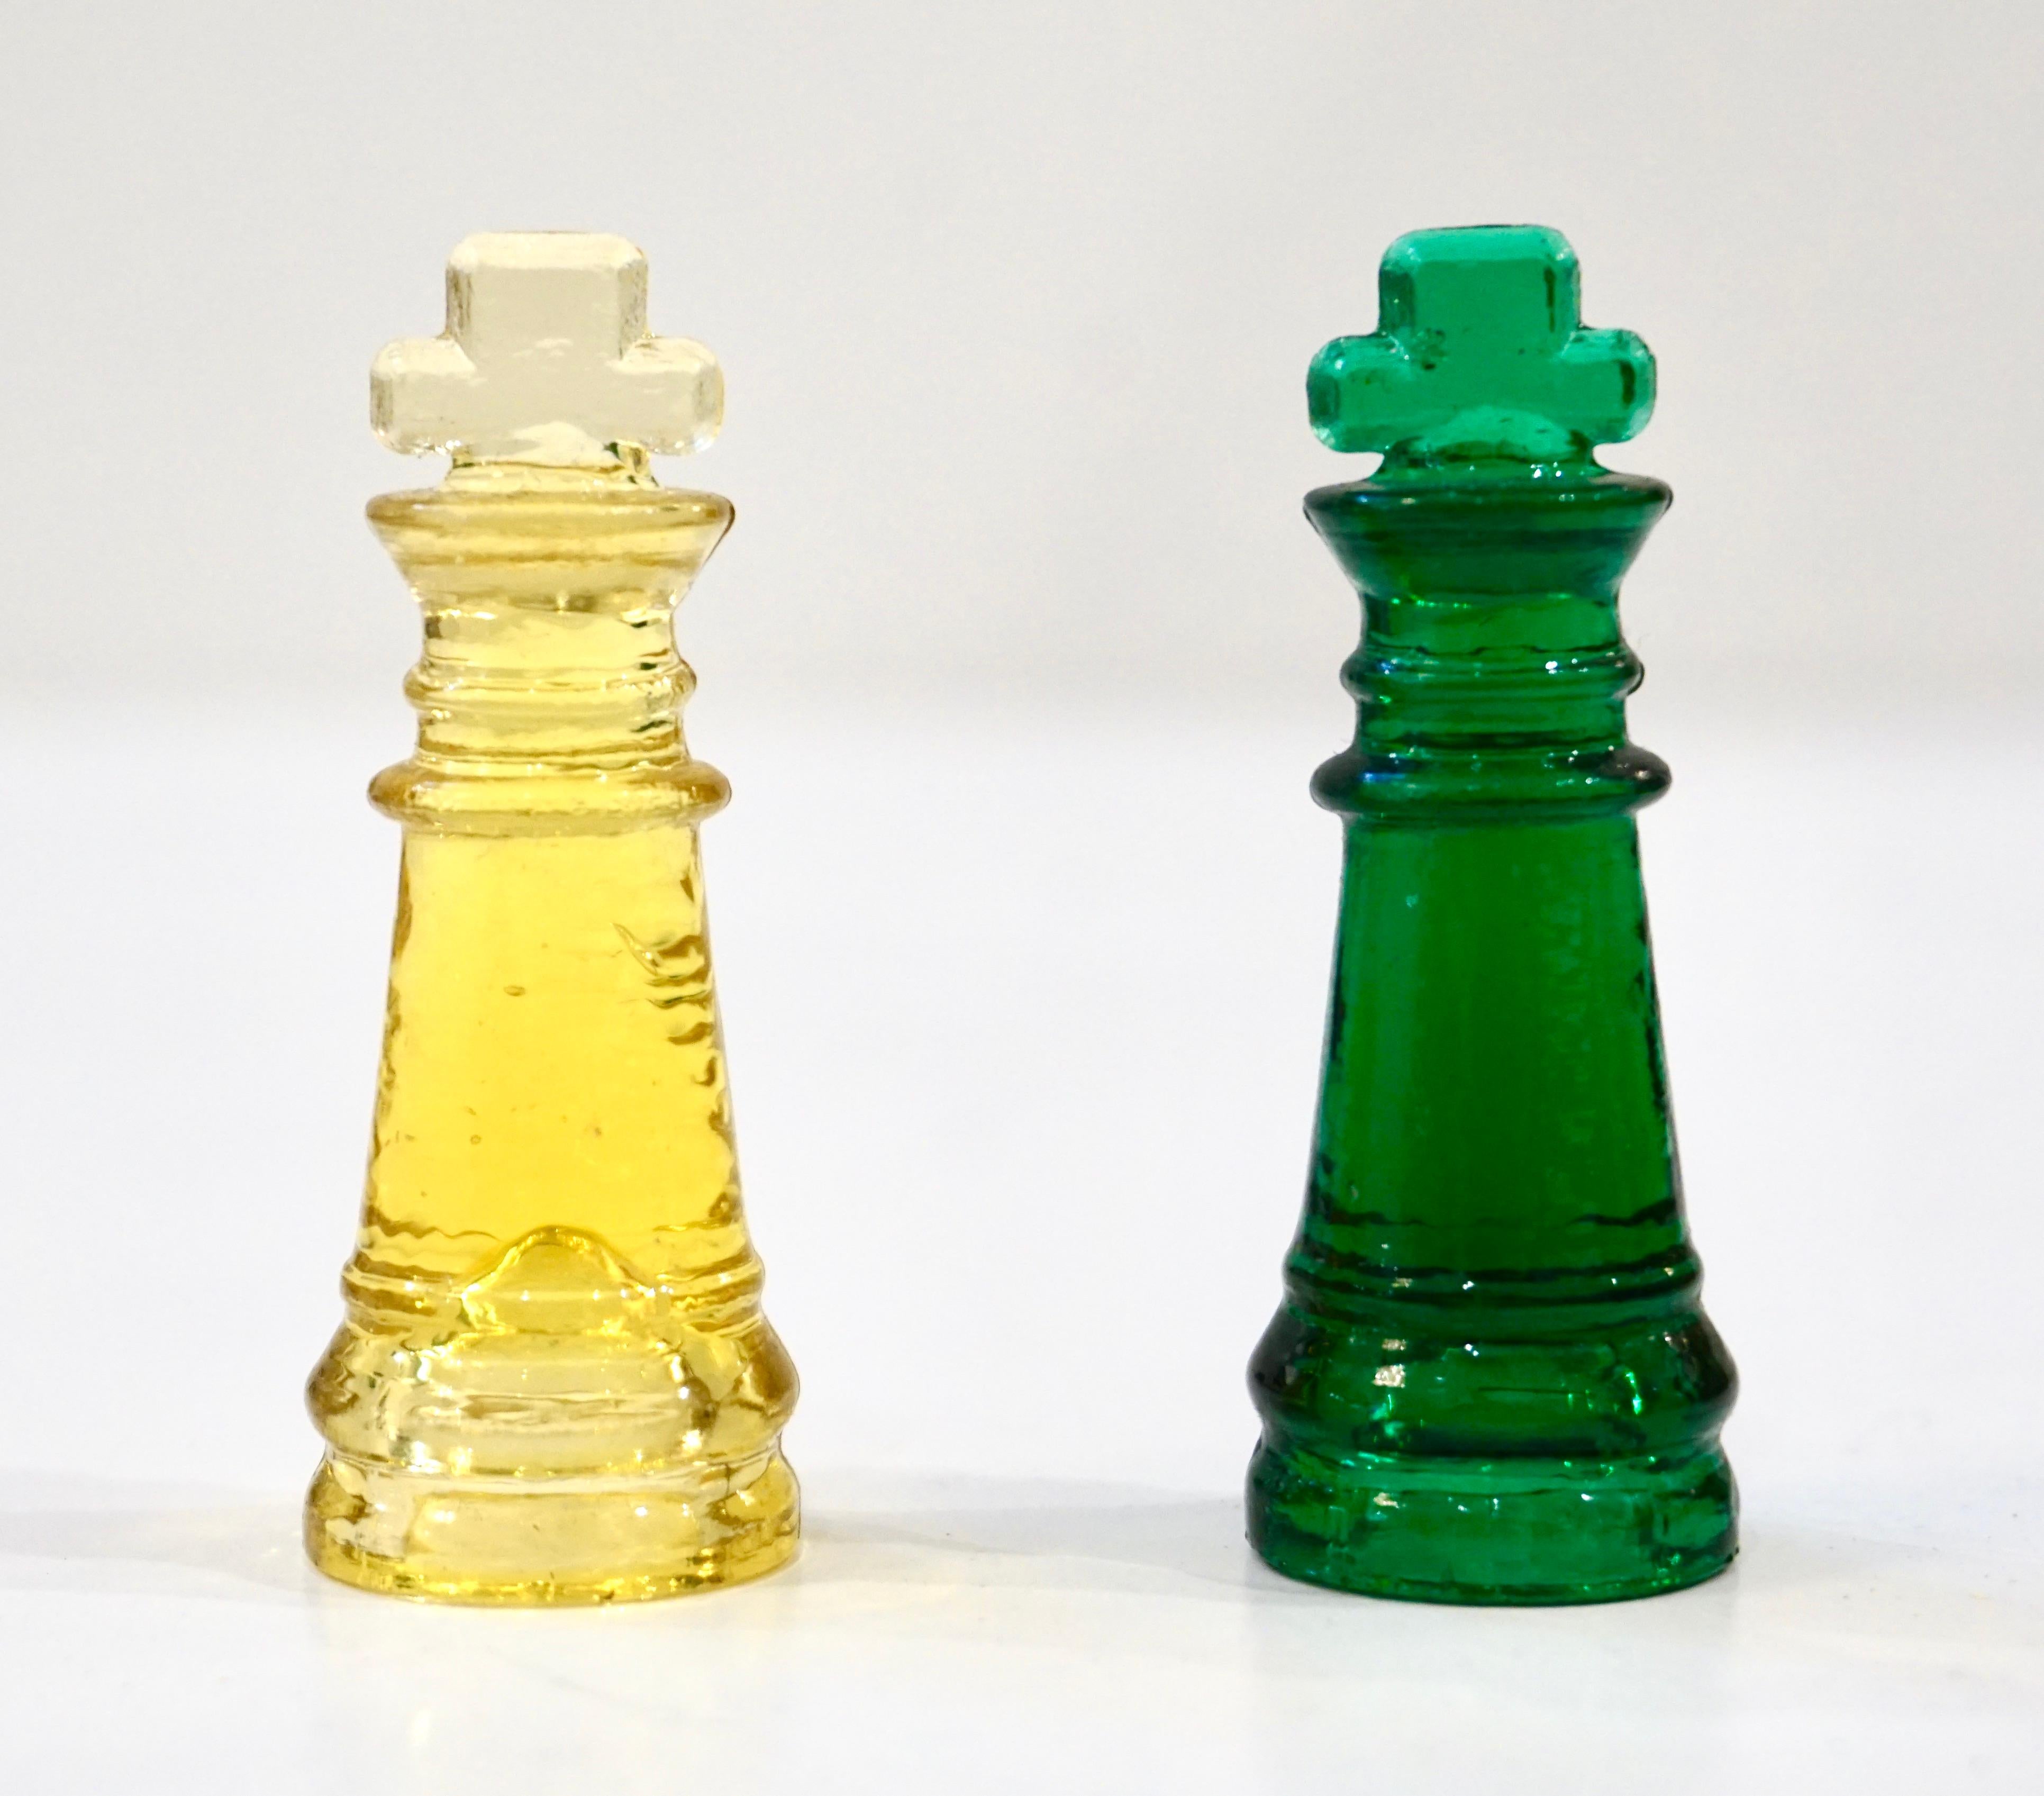 Italian Contemporary Minimalist Green & Yellow Murano Glass Chess Set on Mirrored Board